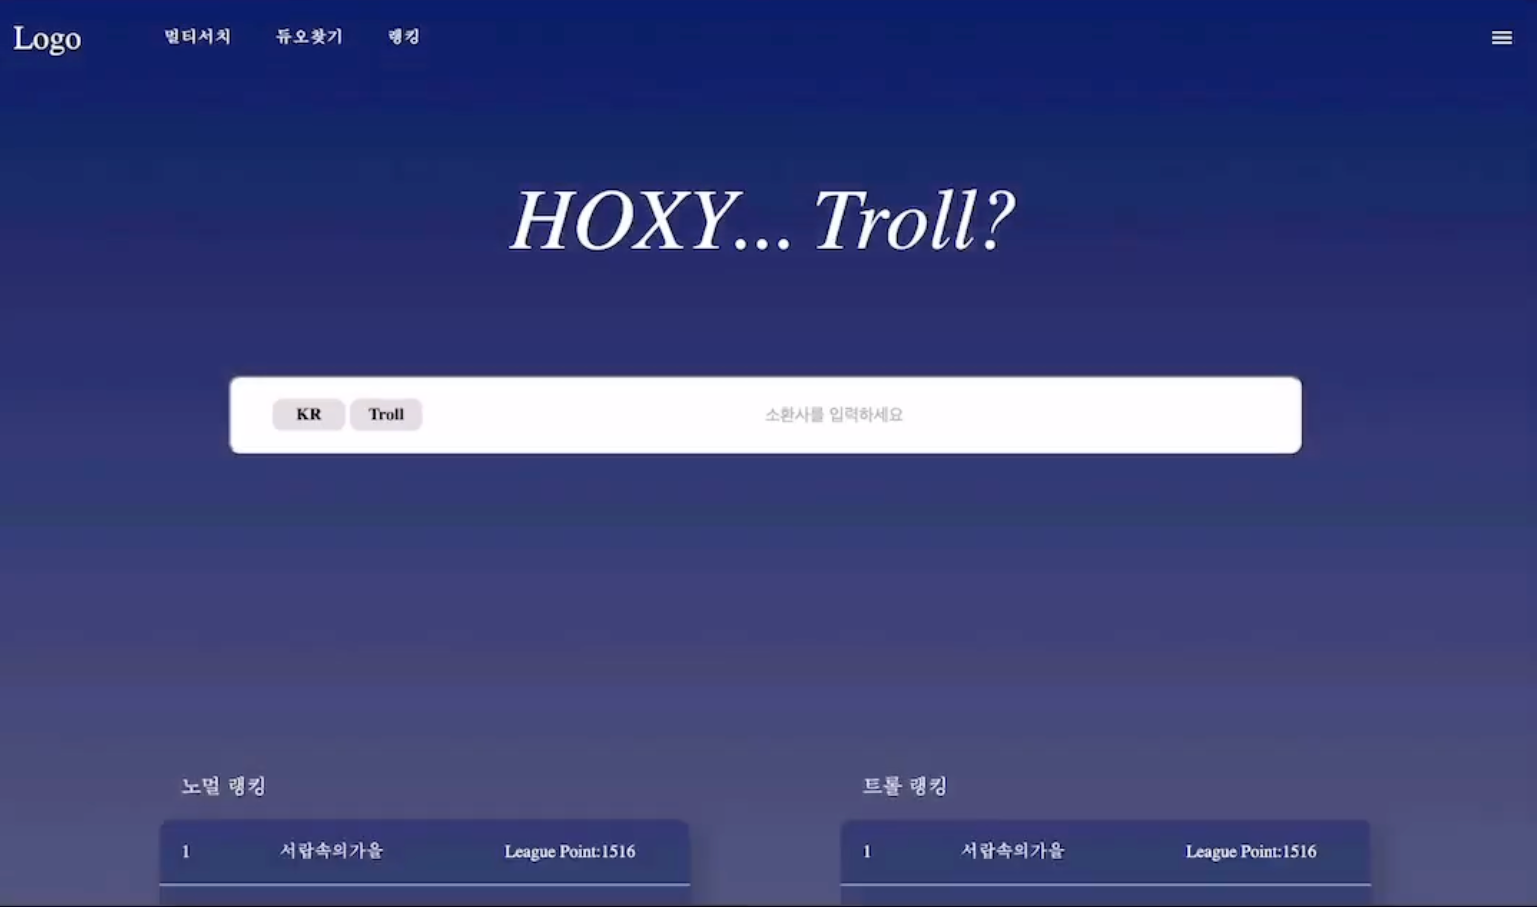 Hoxy... Troll?